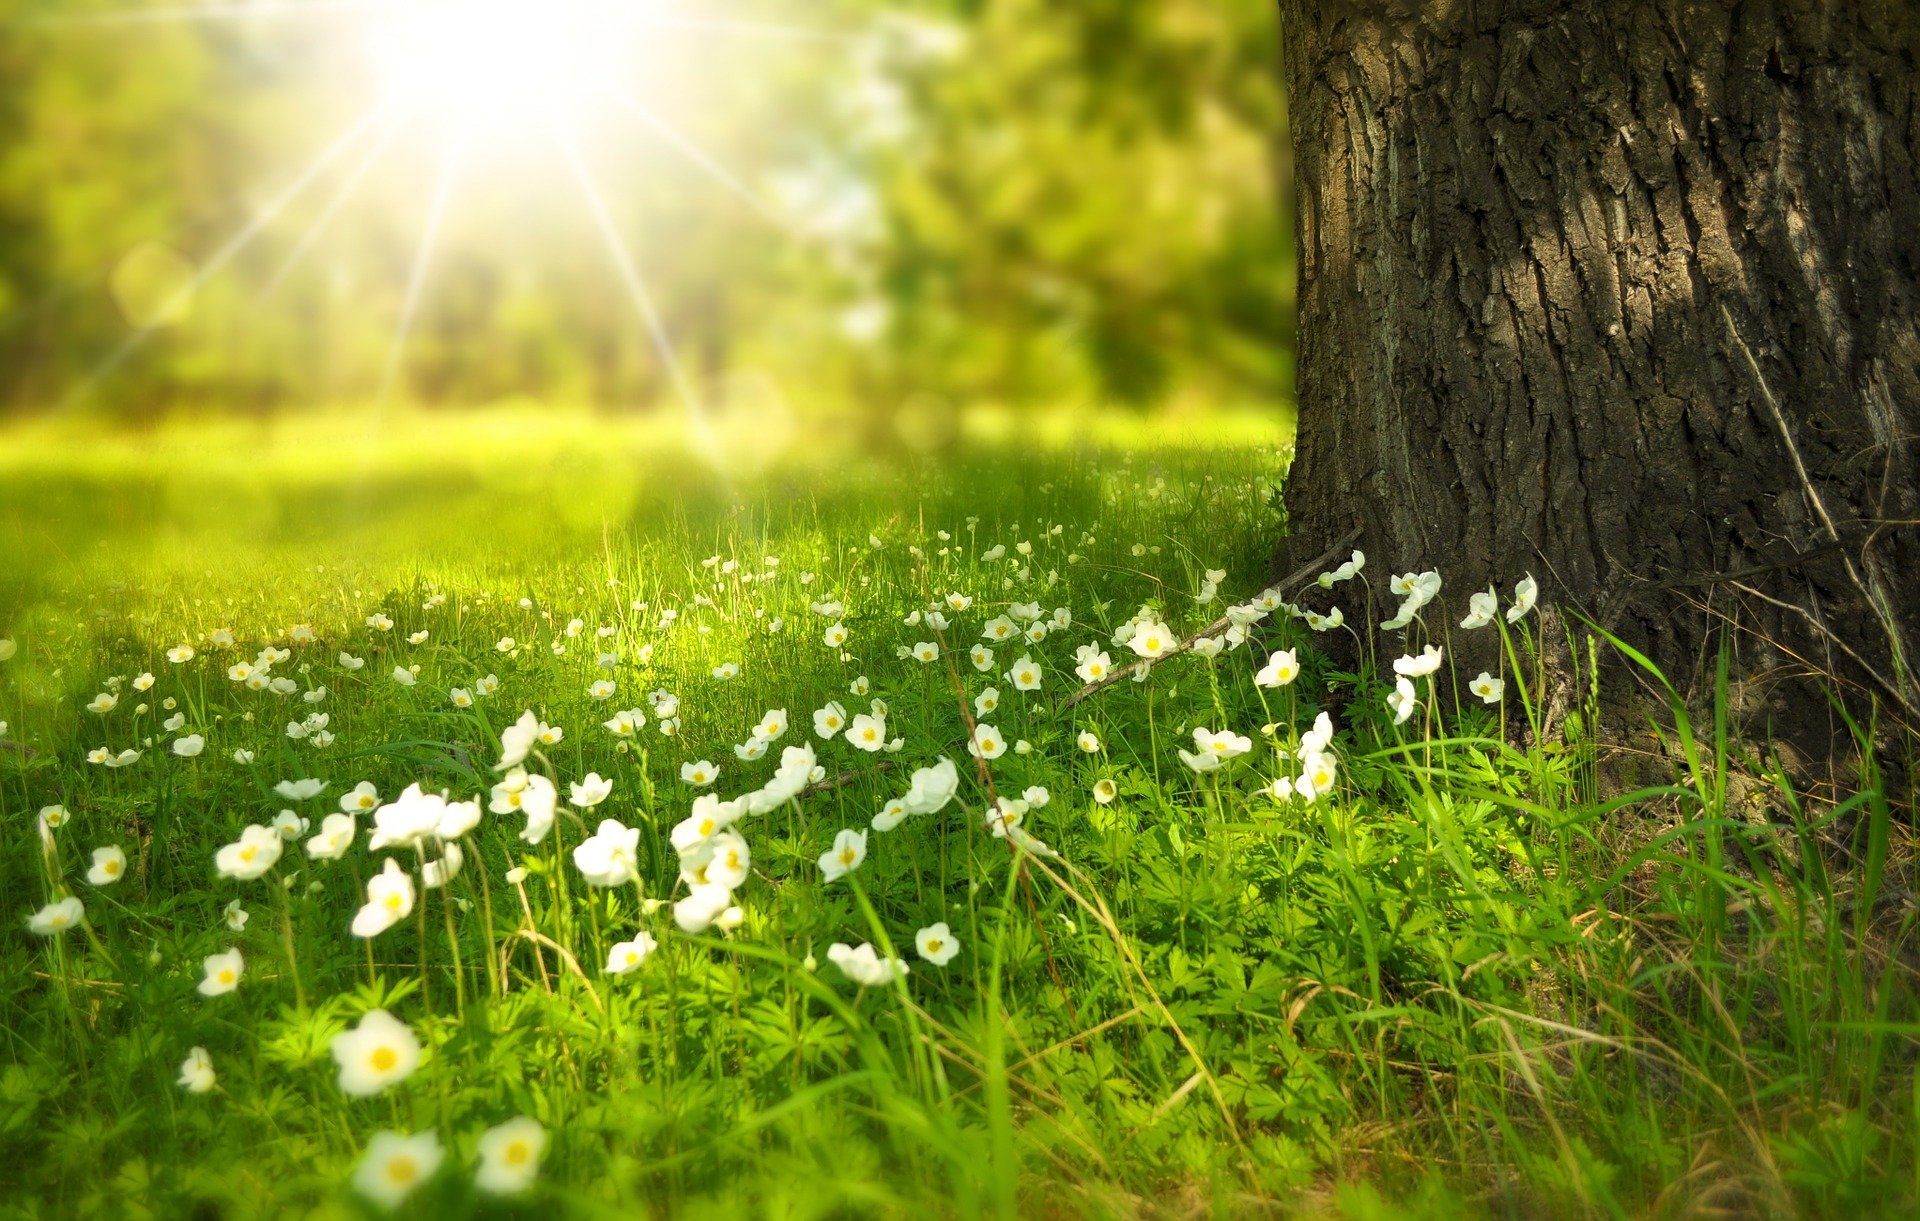 Sunlight shining behind a tree with small white flowers at base Image by Larisa Koshkina from Pixabay